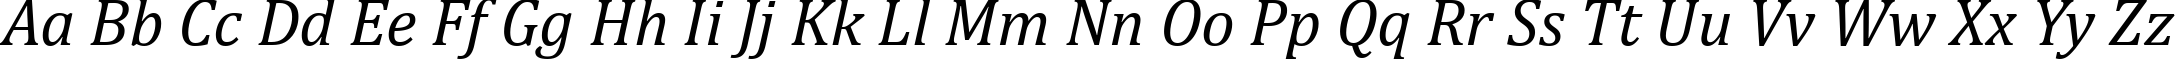 Пример написания английского алфавита шрифтом Cambria Italic